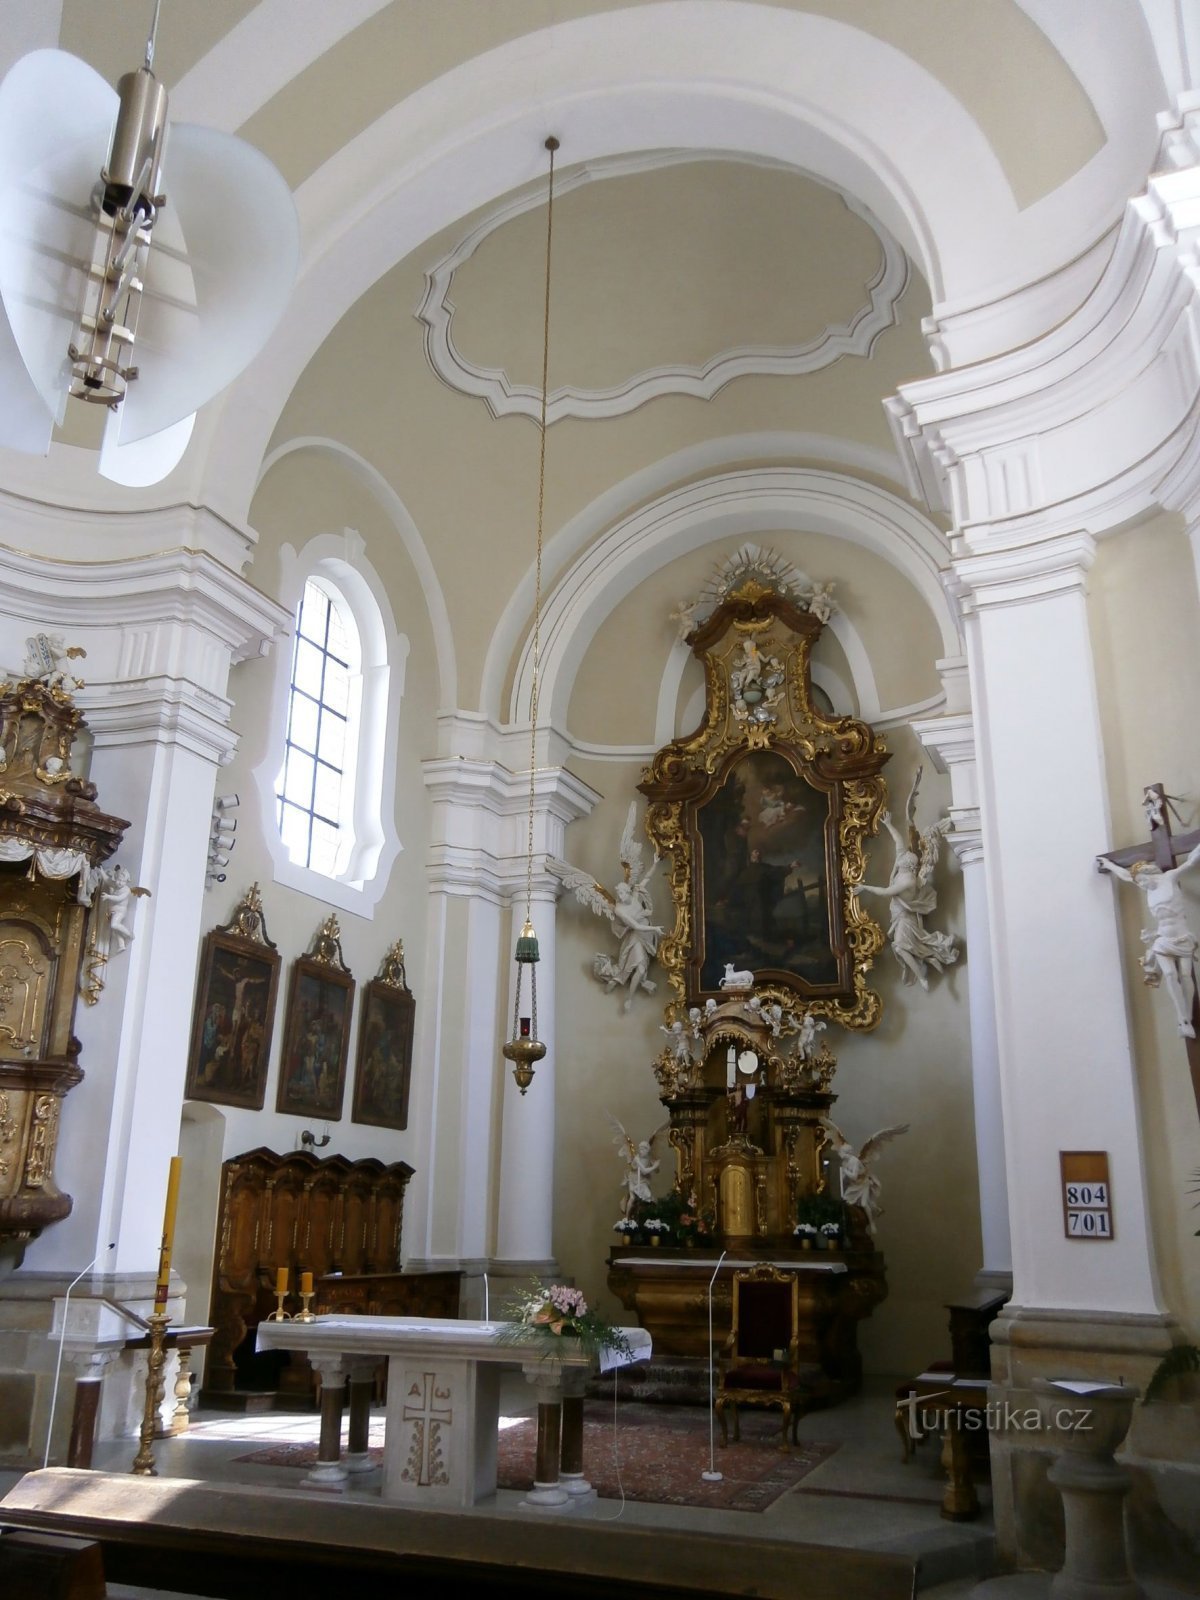 Interiør af kirken St. Antonína (Hradec Králové, 23.5.2014. maj XNUMX)